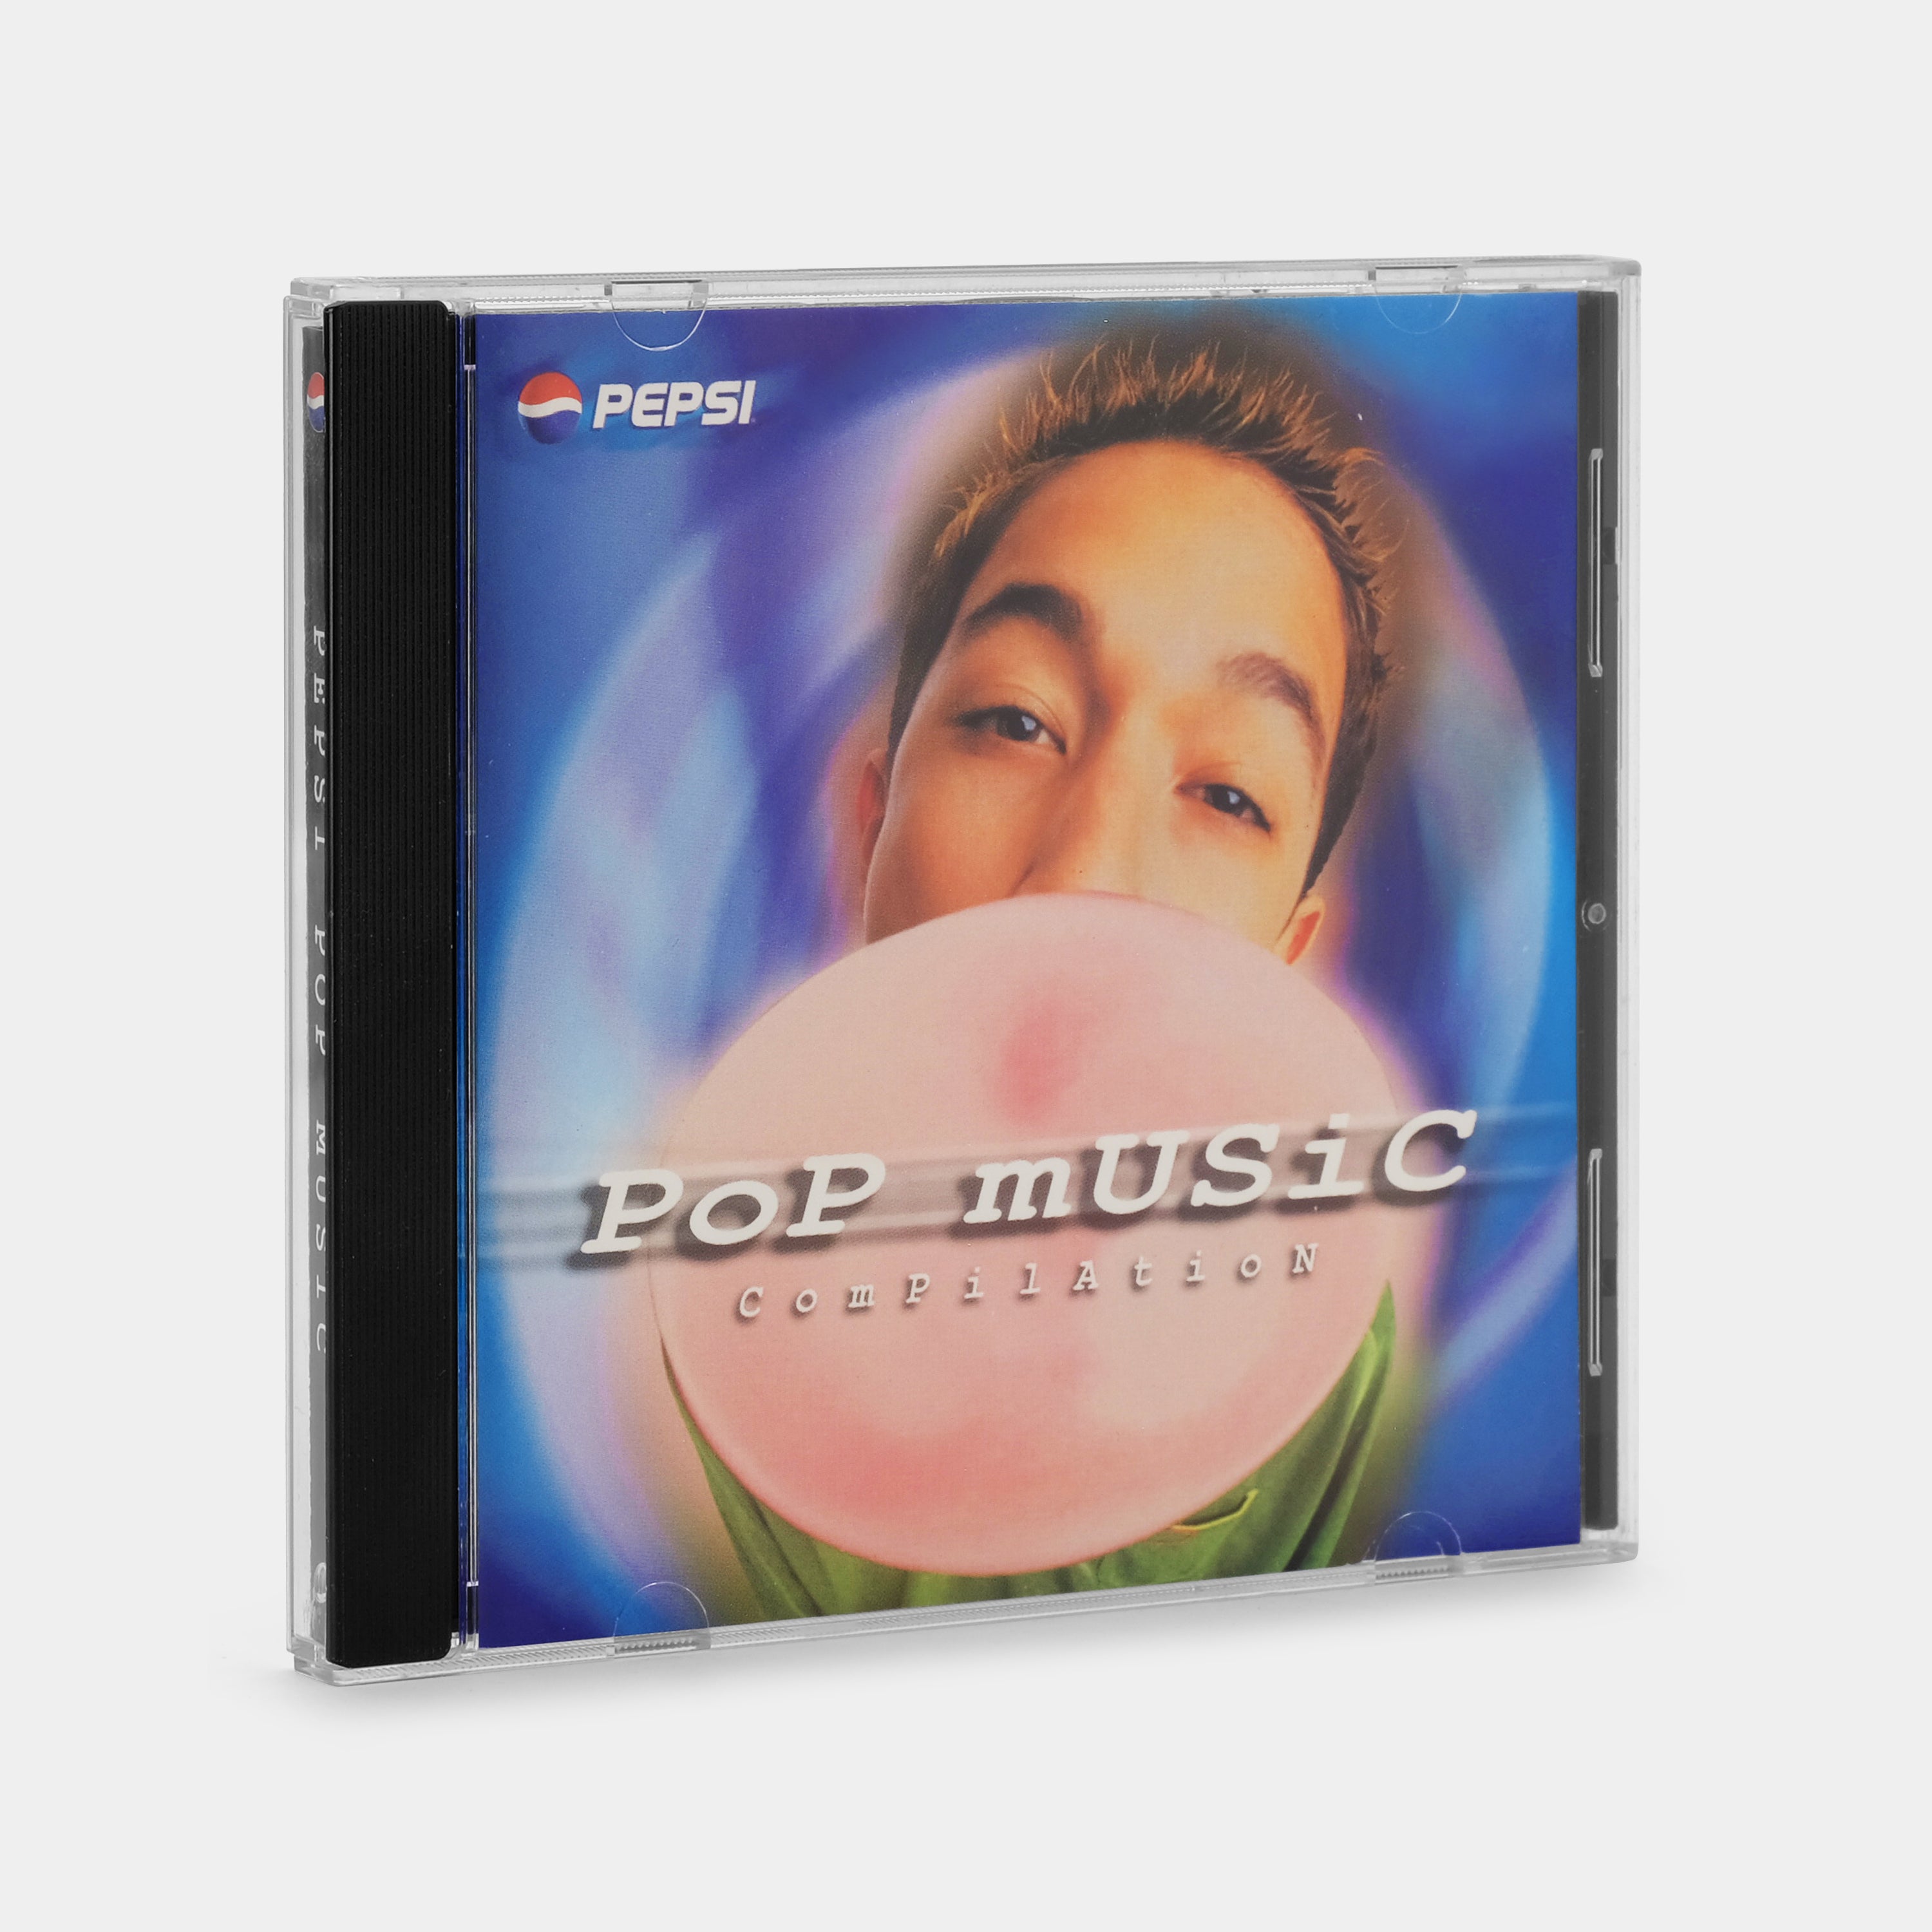 Pepsi Pop Music Compilation CD